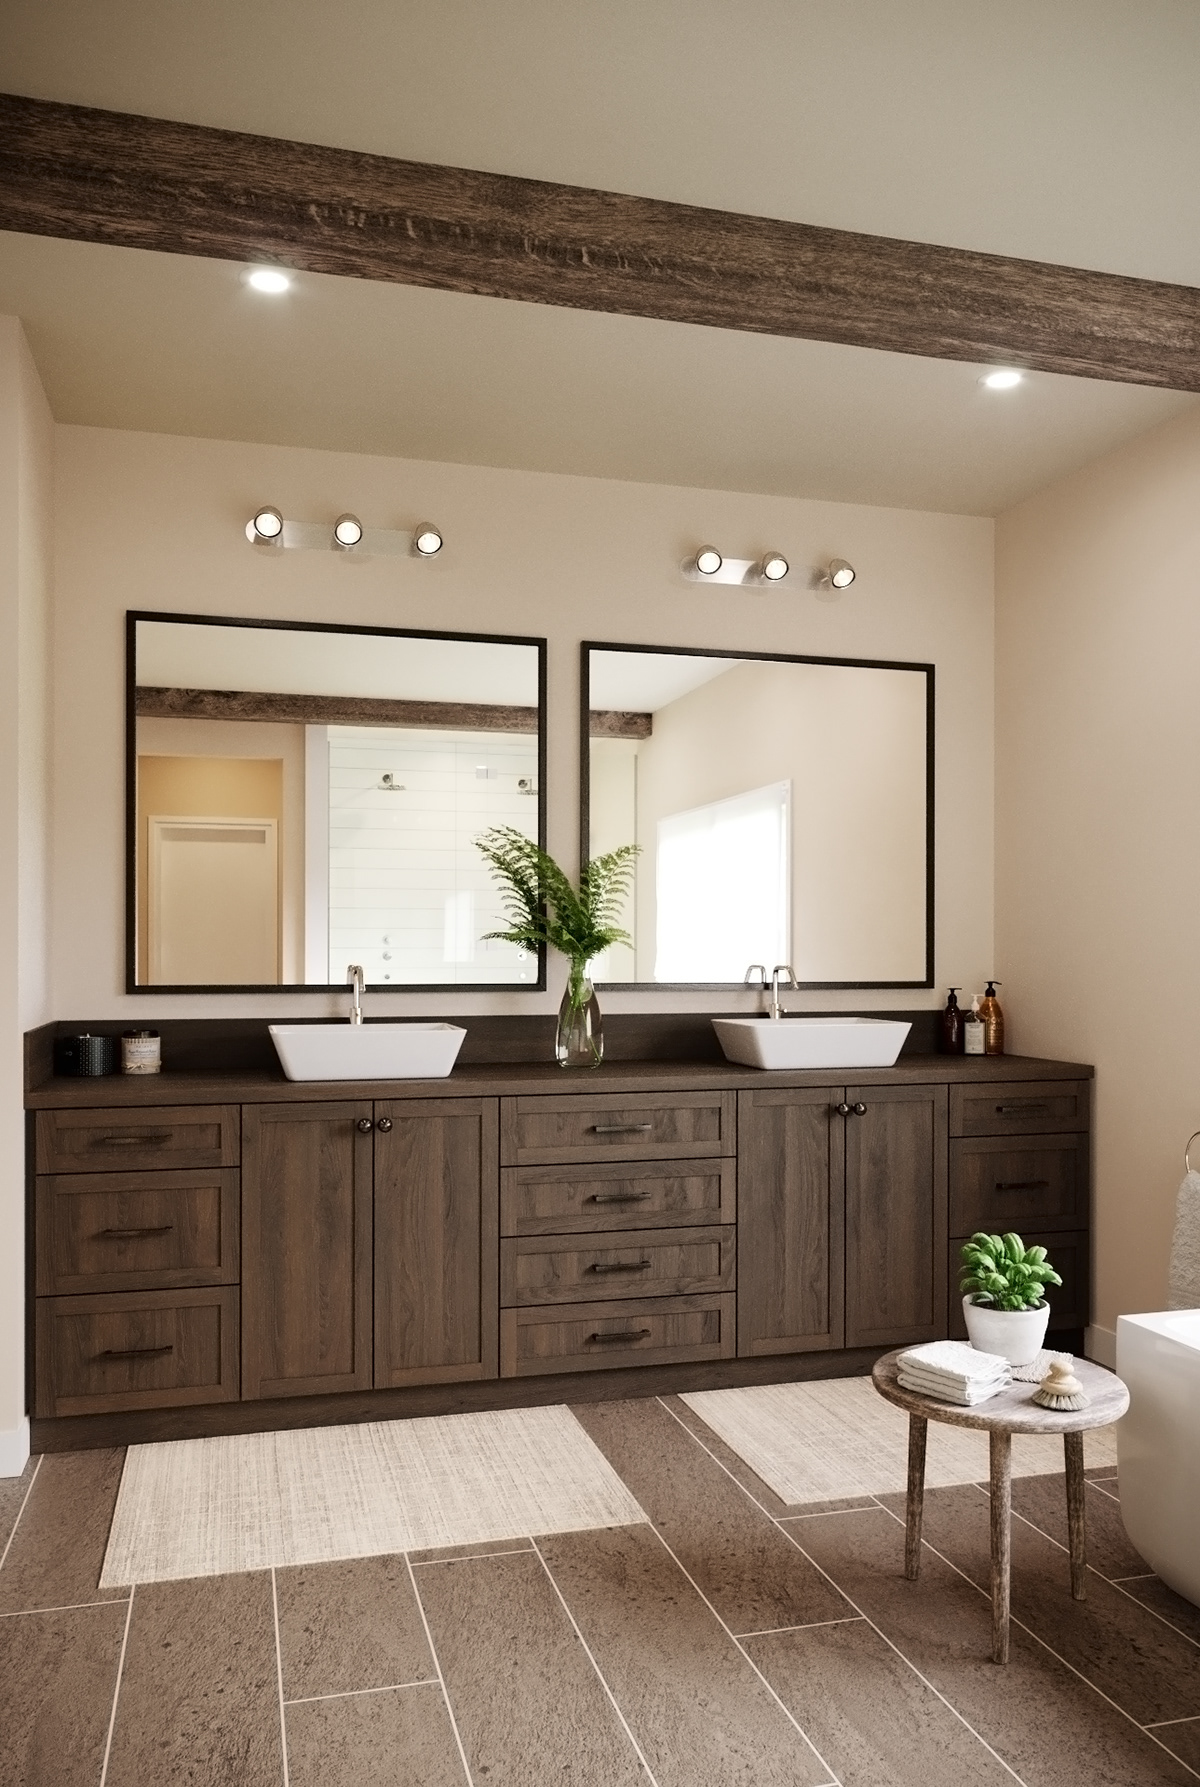 3ds max architecture bathroom design interior design  Render visualization